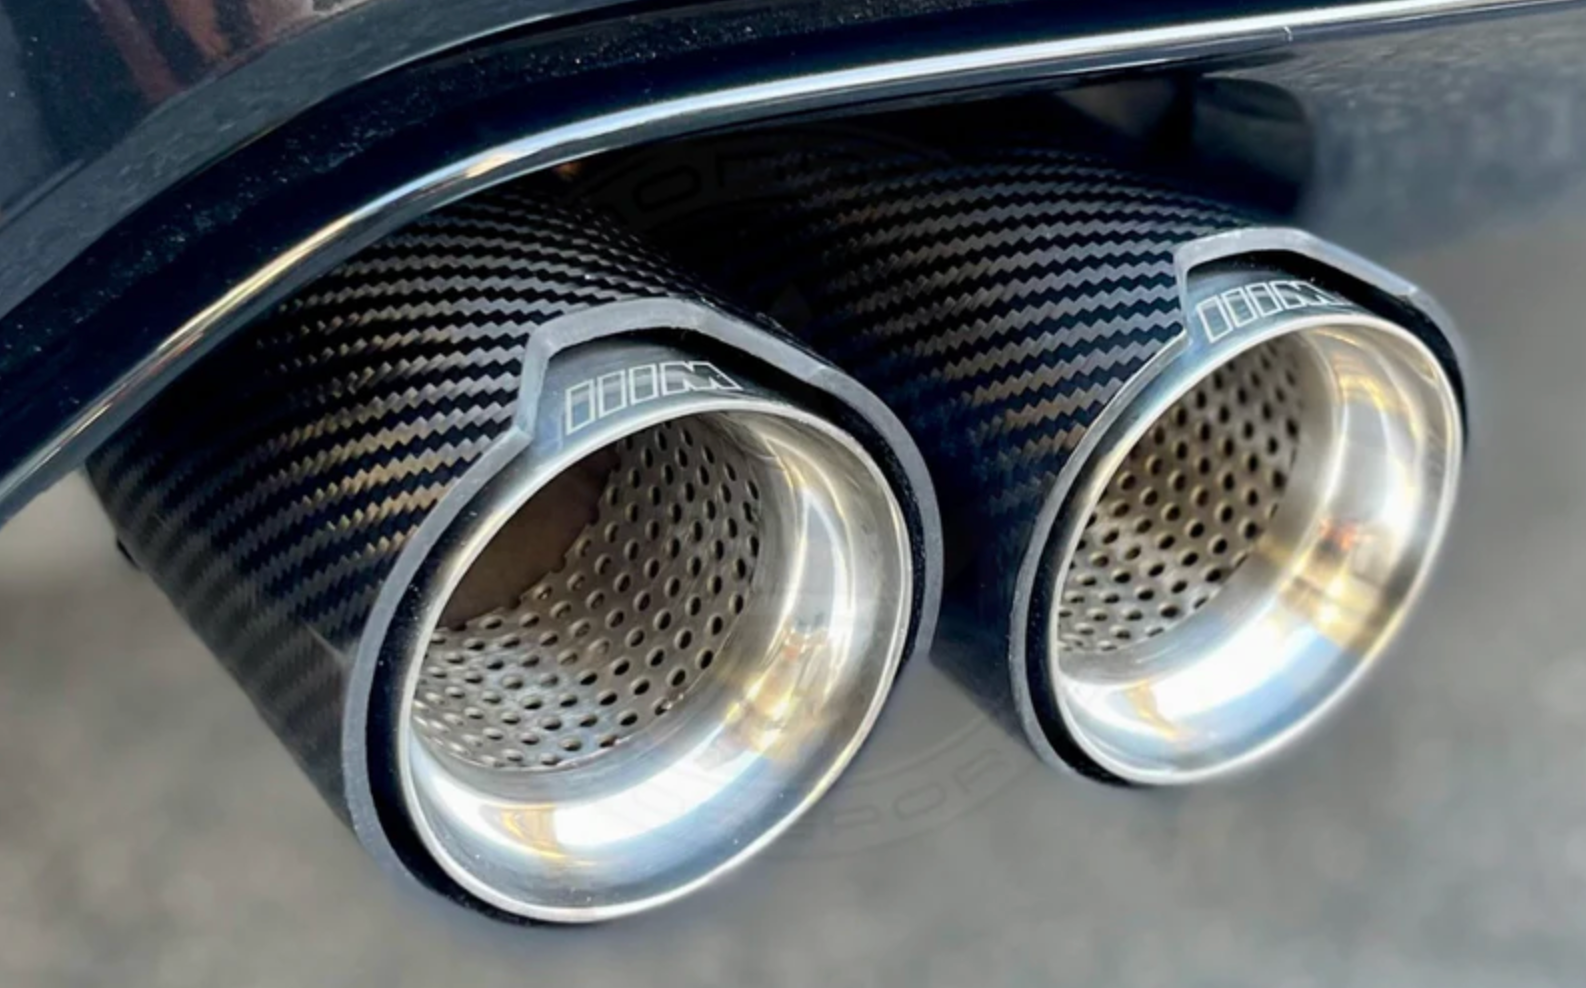 BMW Performance Carbon Fiber Exhaust Tips